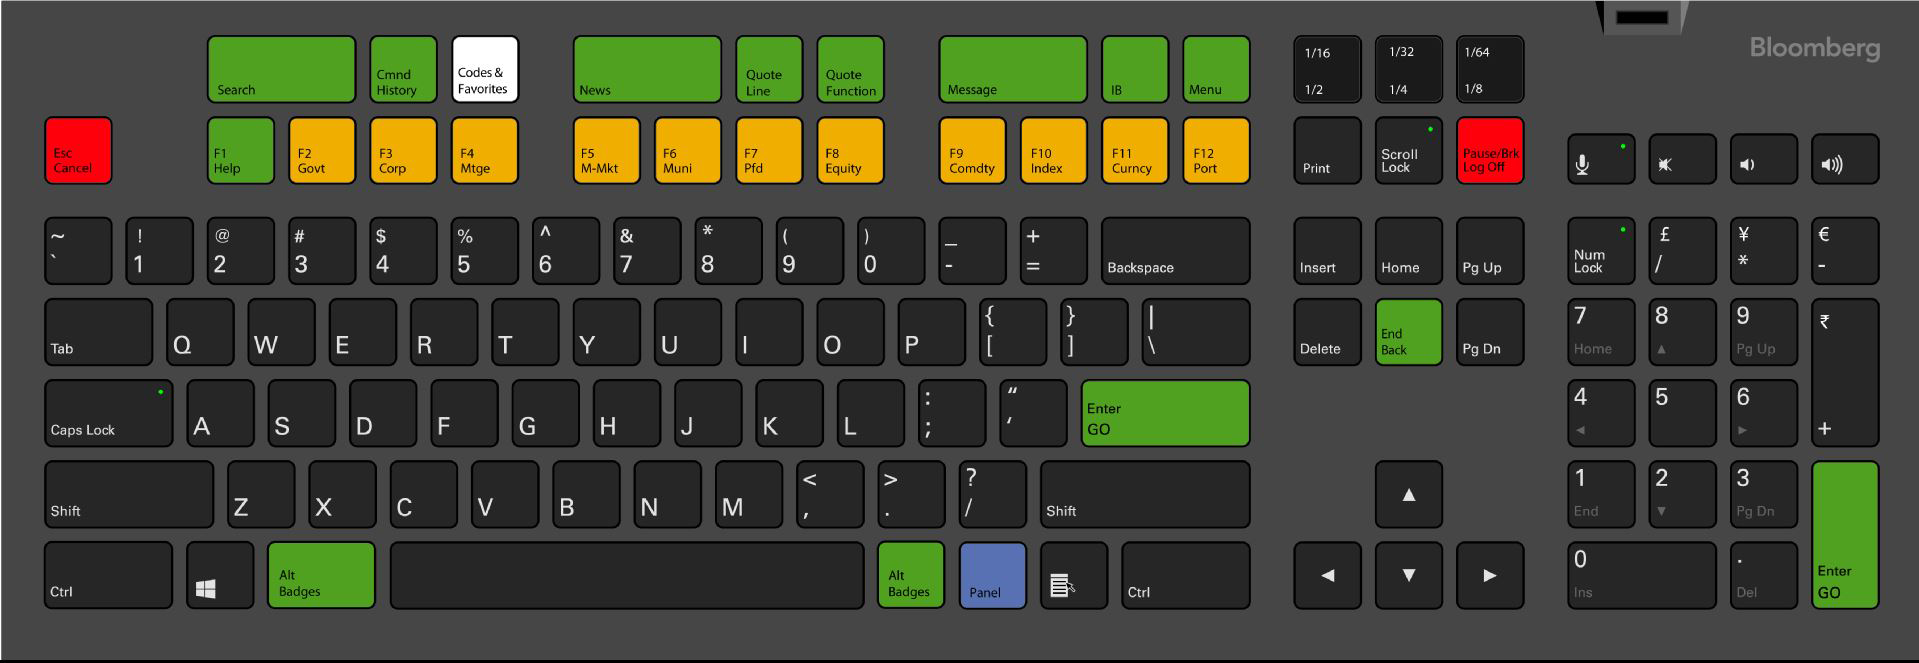 bloomberg keyboard